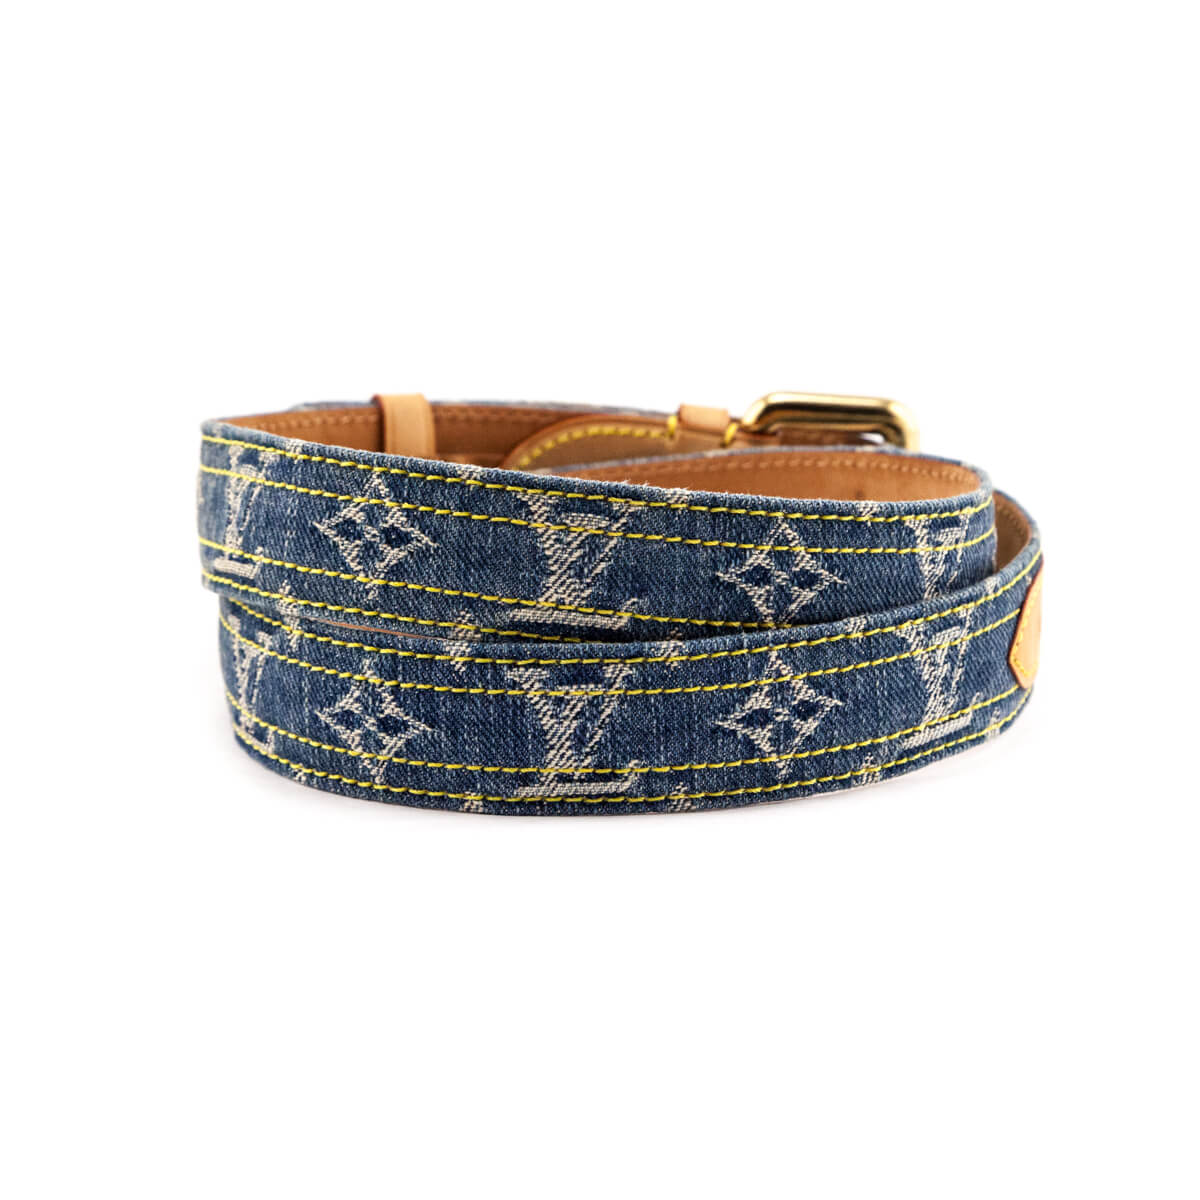 Louis Vuitton Denim Monogram Belt Size XL - Love that Bag etc - Preowned Authentic Designer Handbags & Preloved Fashions